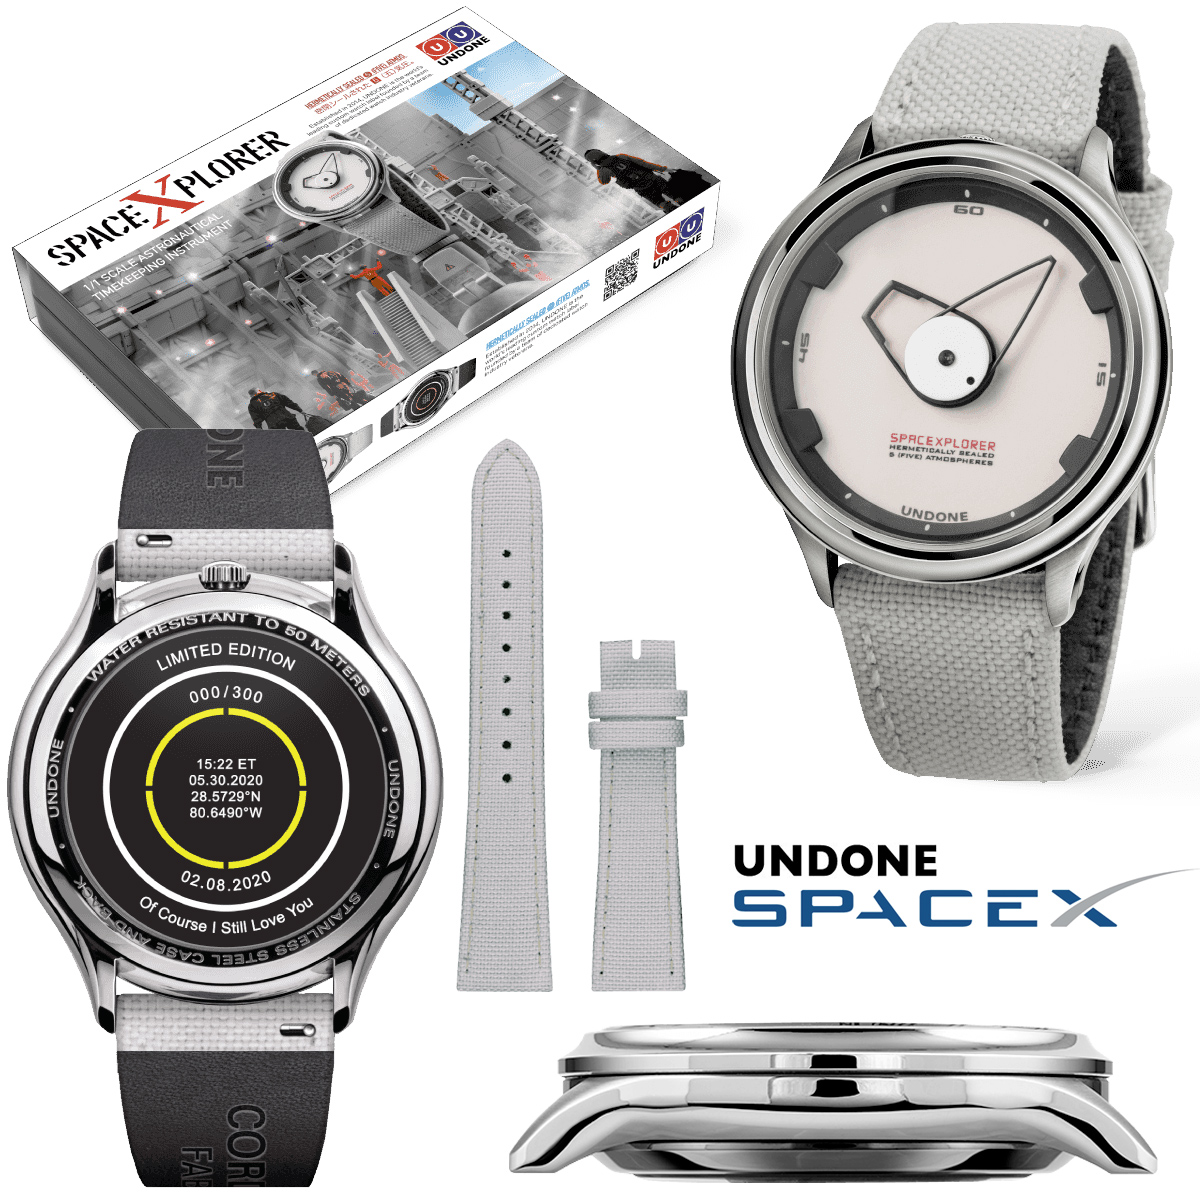 SpaceXplorer Watch